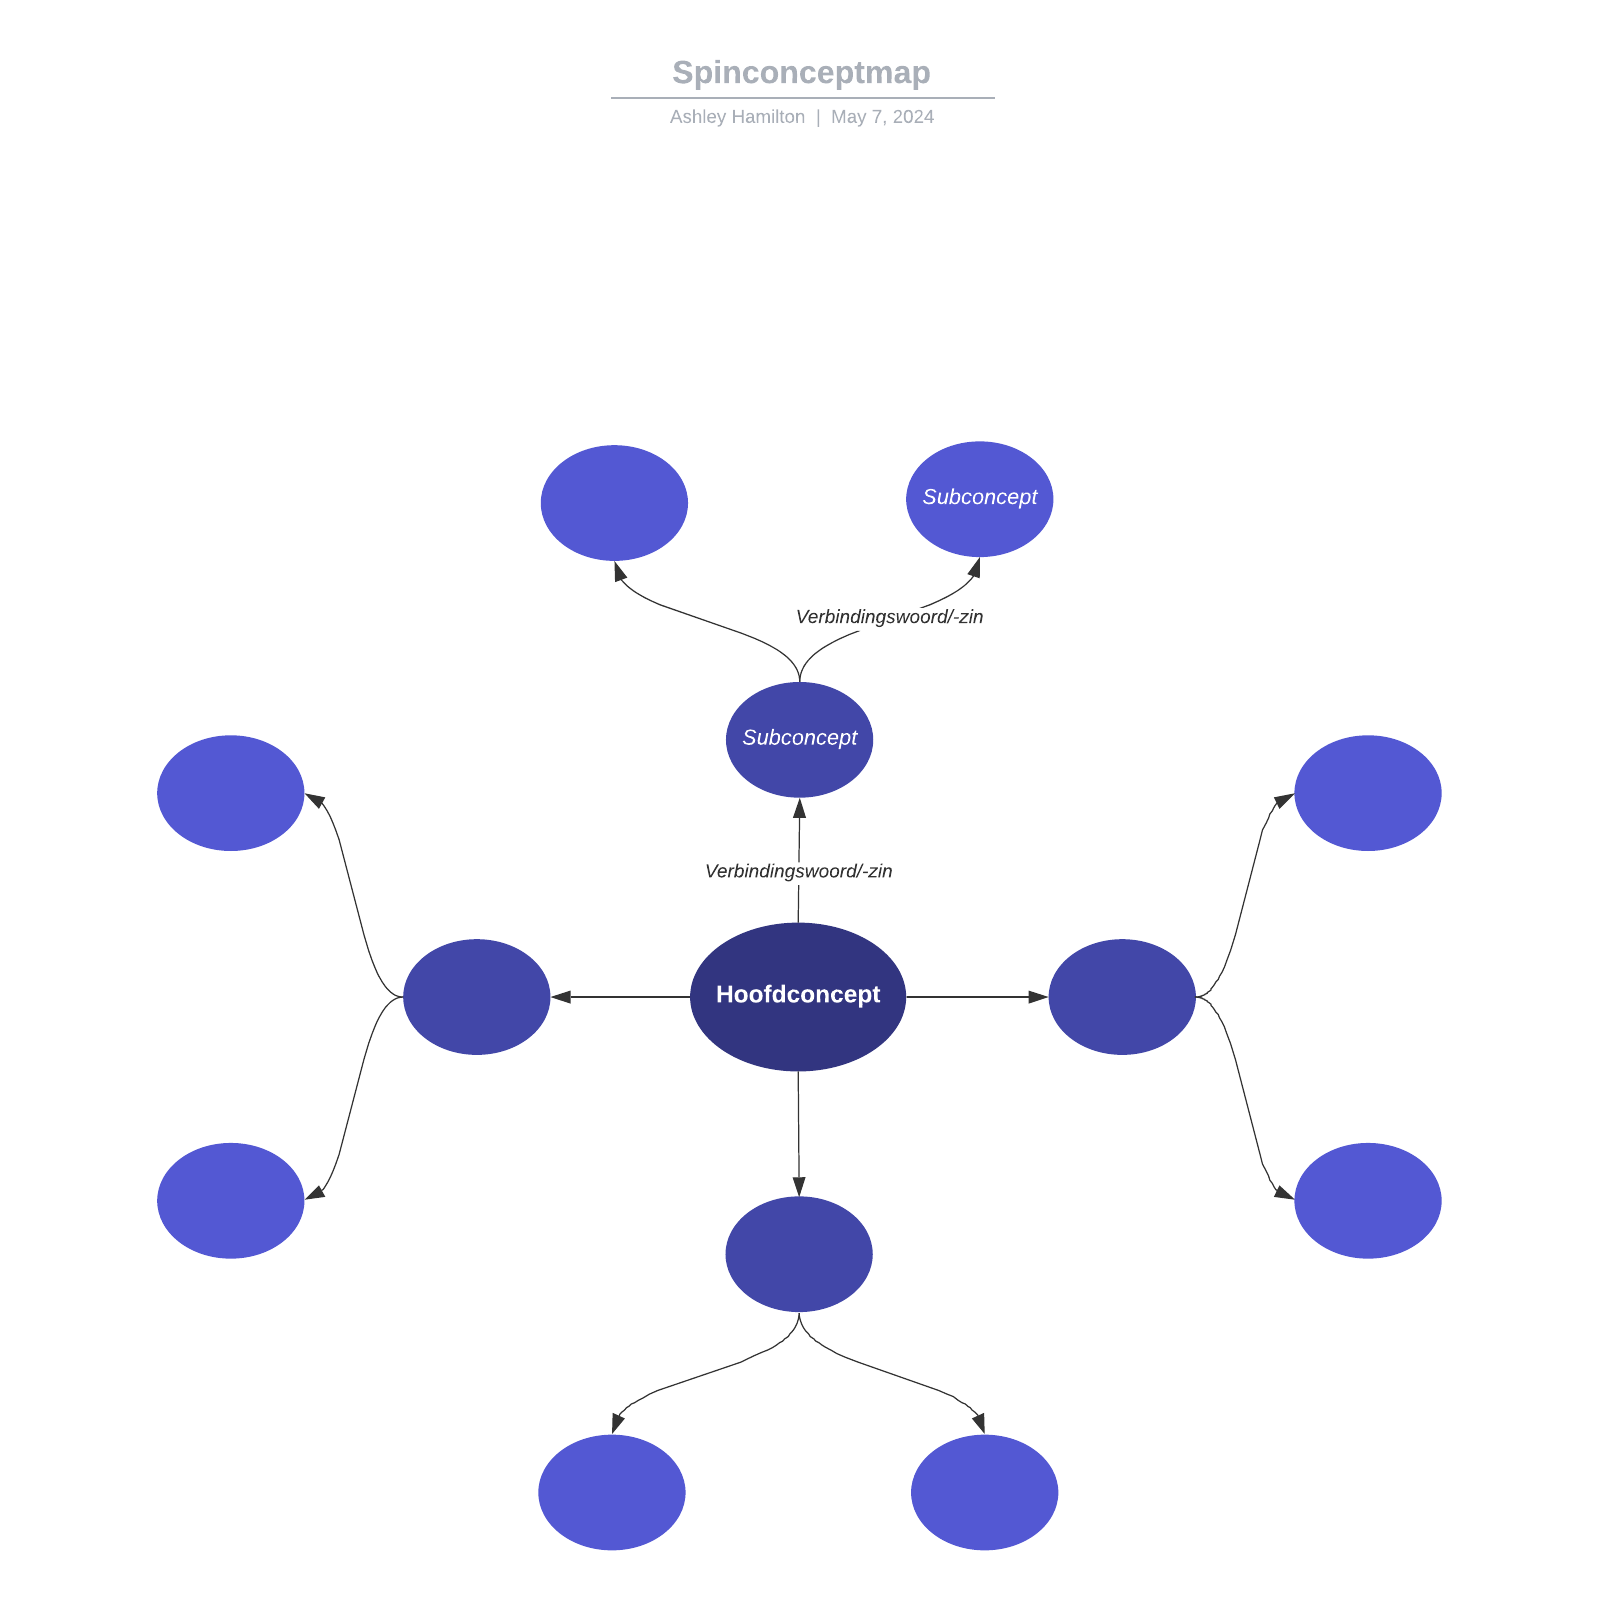 Spinconceptmap example